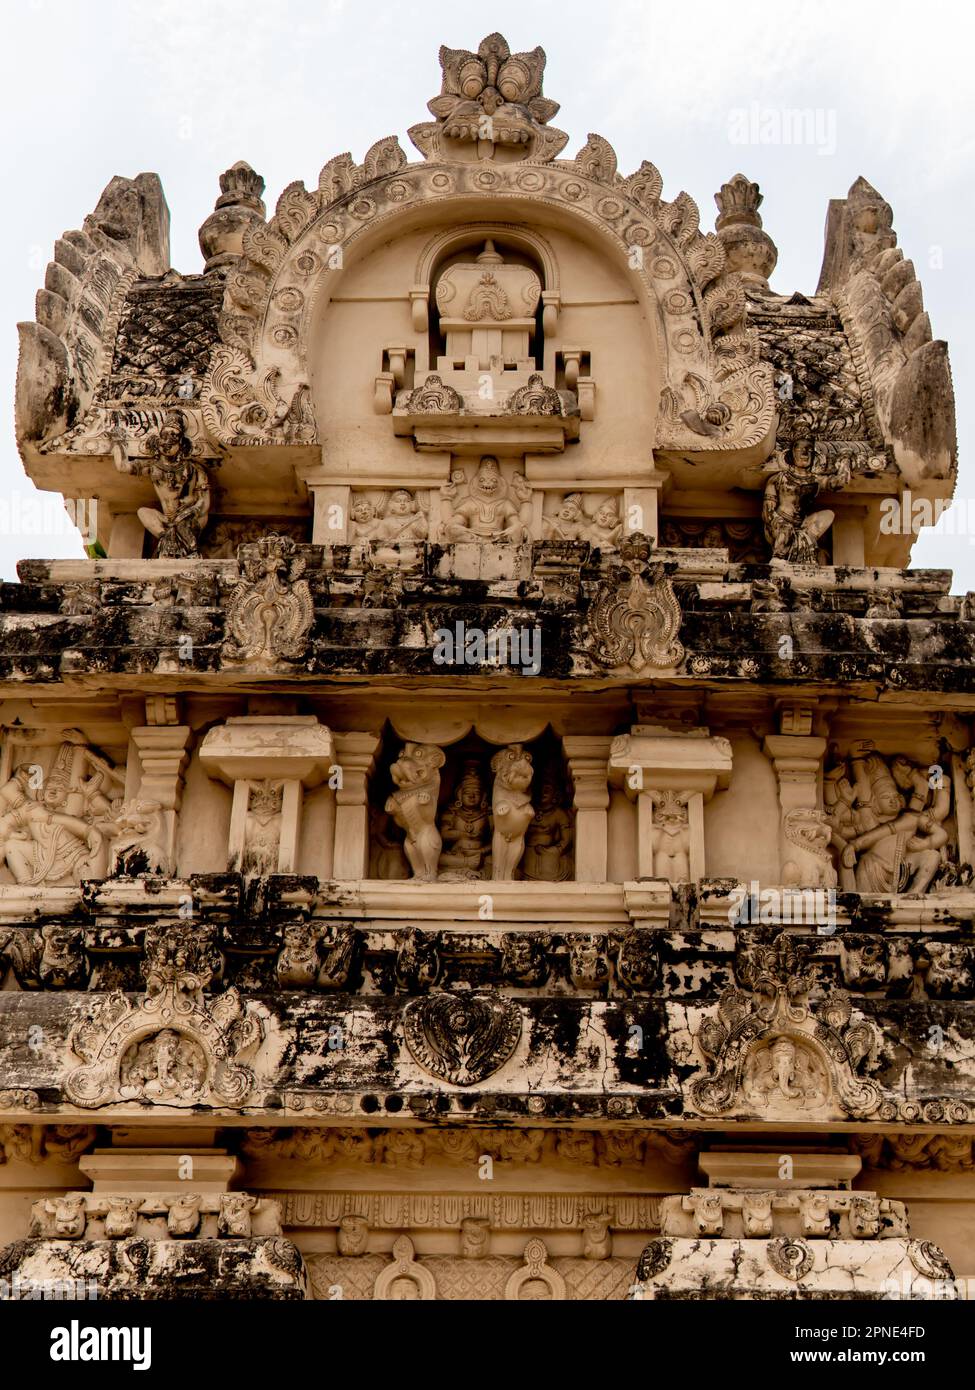 Gopuram view in the Kailasanathar temple located in kanchipuram dedicated to lord shiva Stock Photo